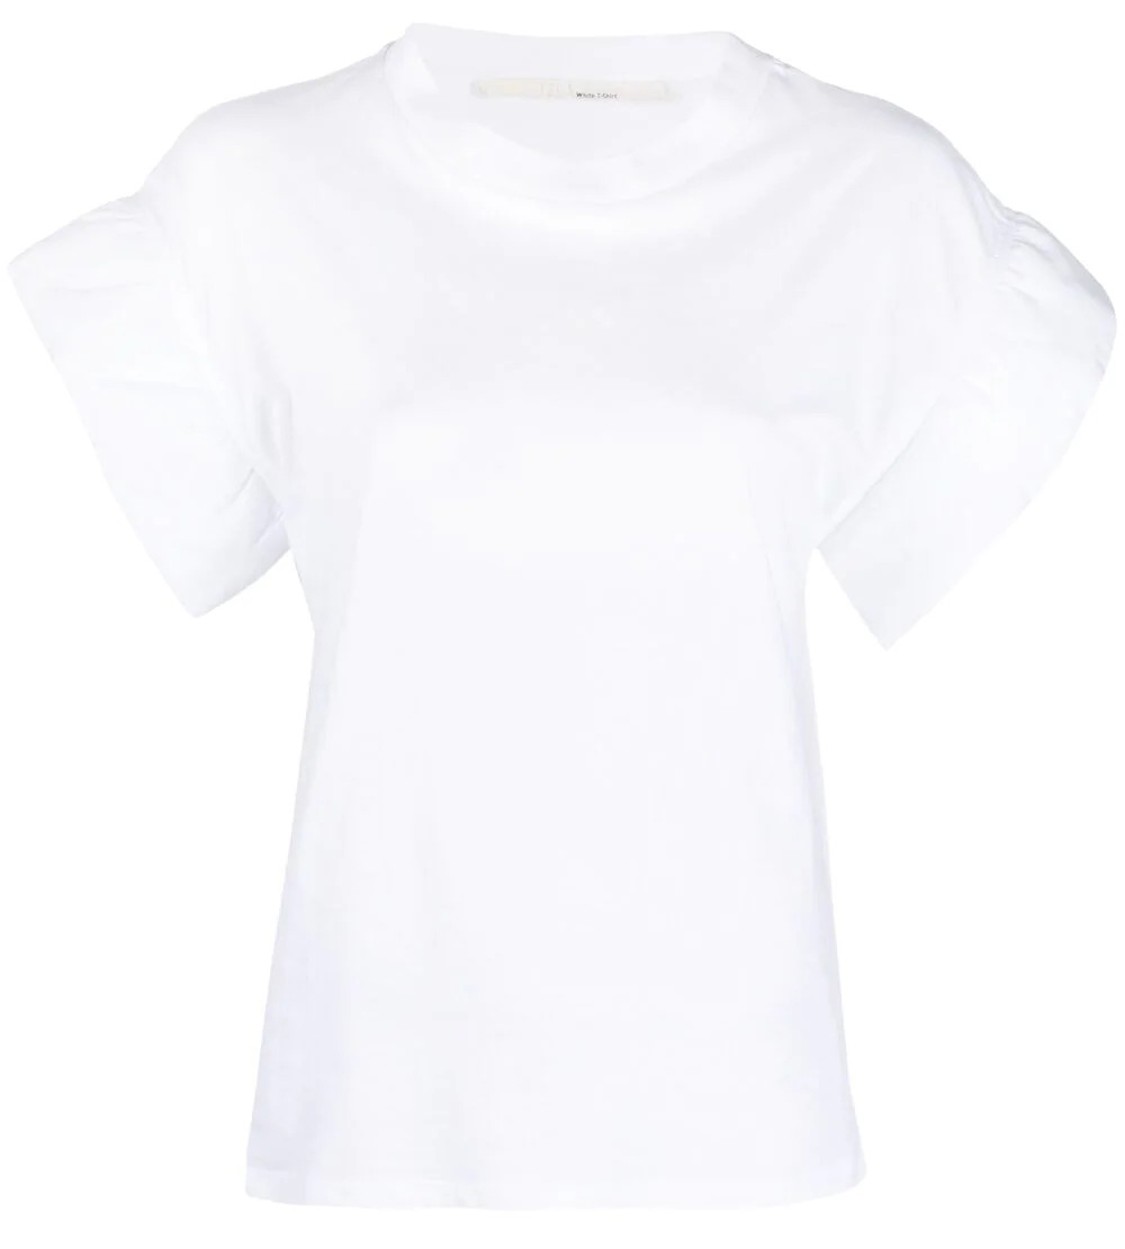 shop Tela Saldi T-shirts: T-shirts Tela, manica corta, girocollo, fit regolare, manica bold.

Composizione: 100% cotone. number 2147